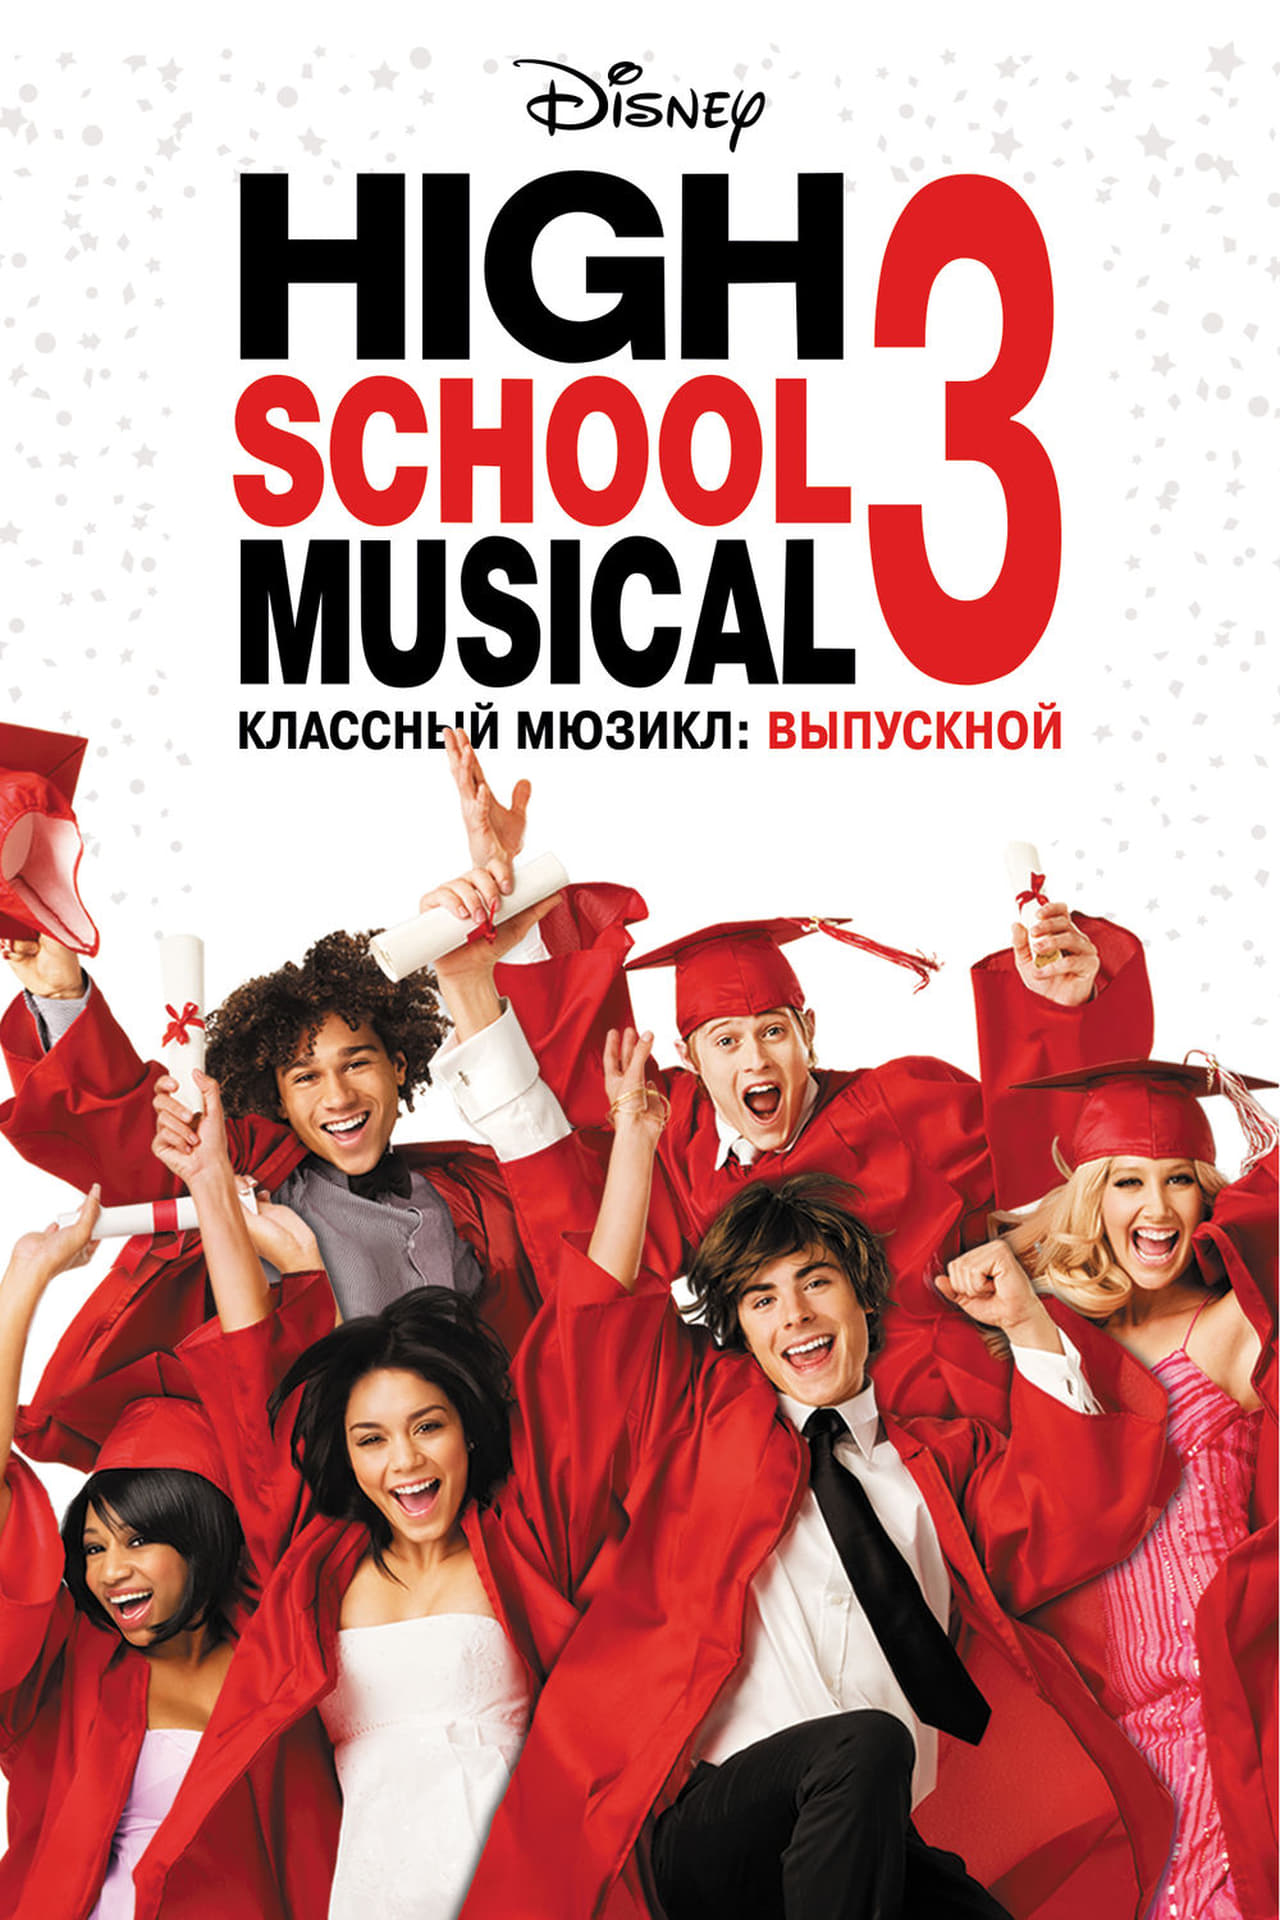 Музыкальный мюзикл 3. Классный мюзикл 3: выпускной (2008). Классный мюзикл 3 выпускной.